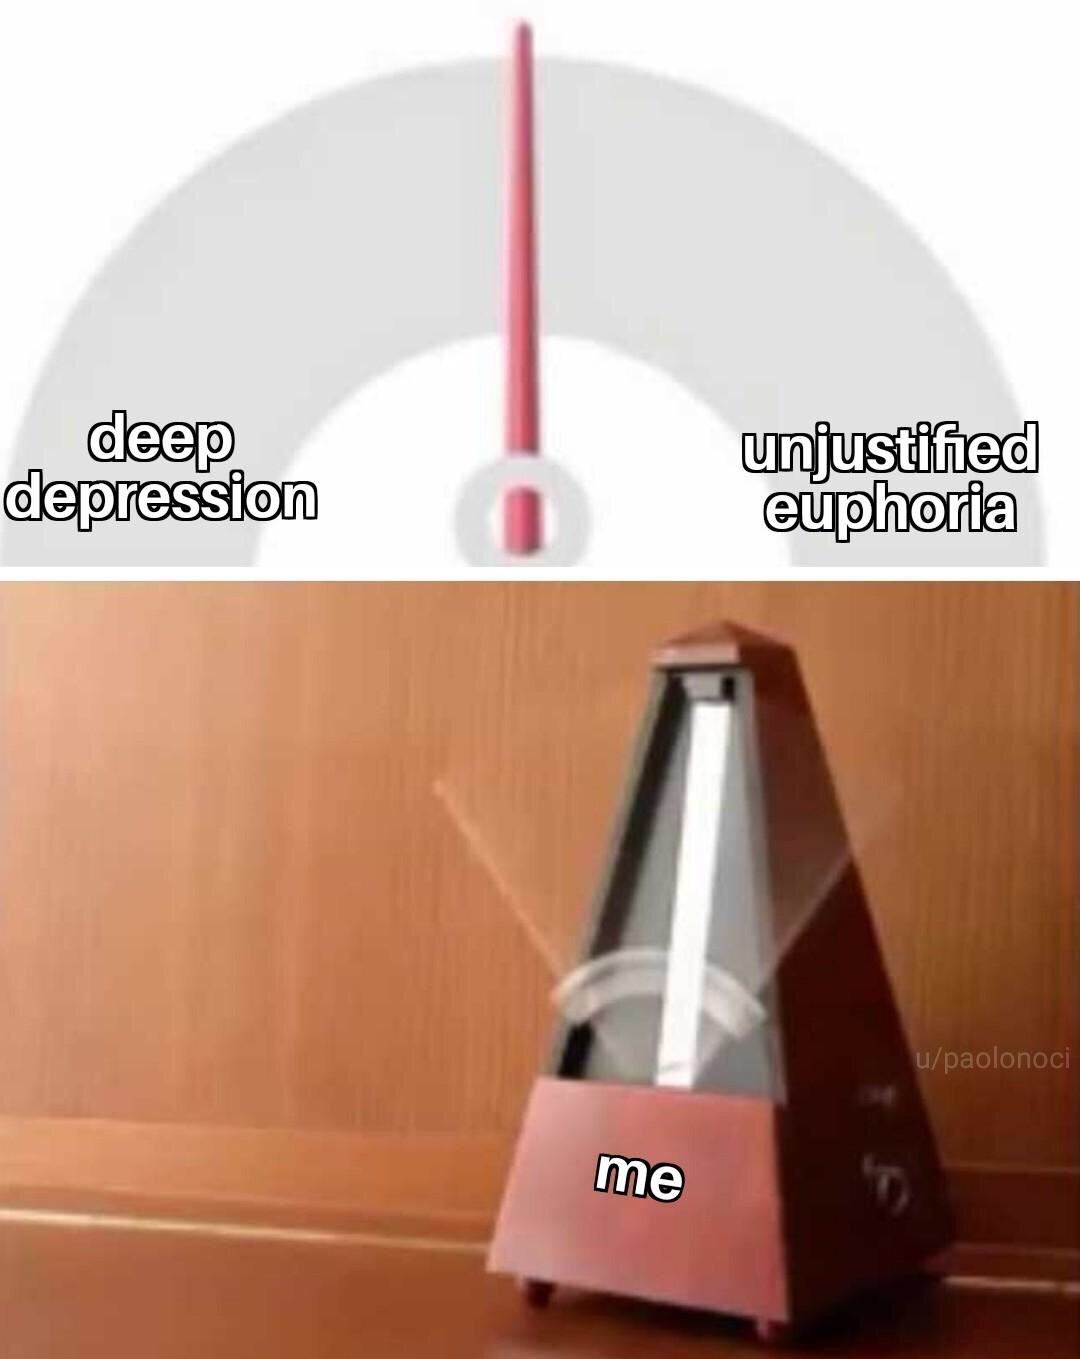 keanu reeves metronome meme - deep depression unjustified euphoria upaolonoci me